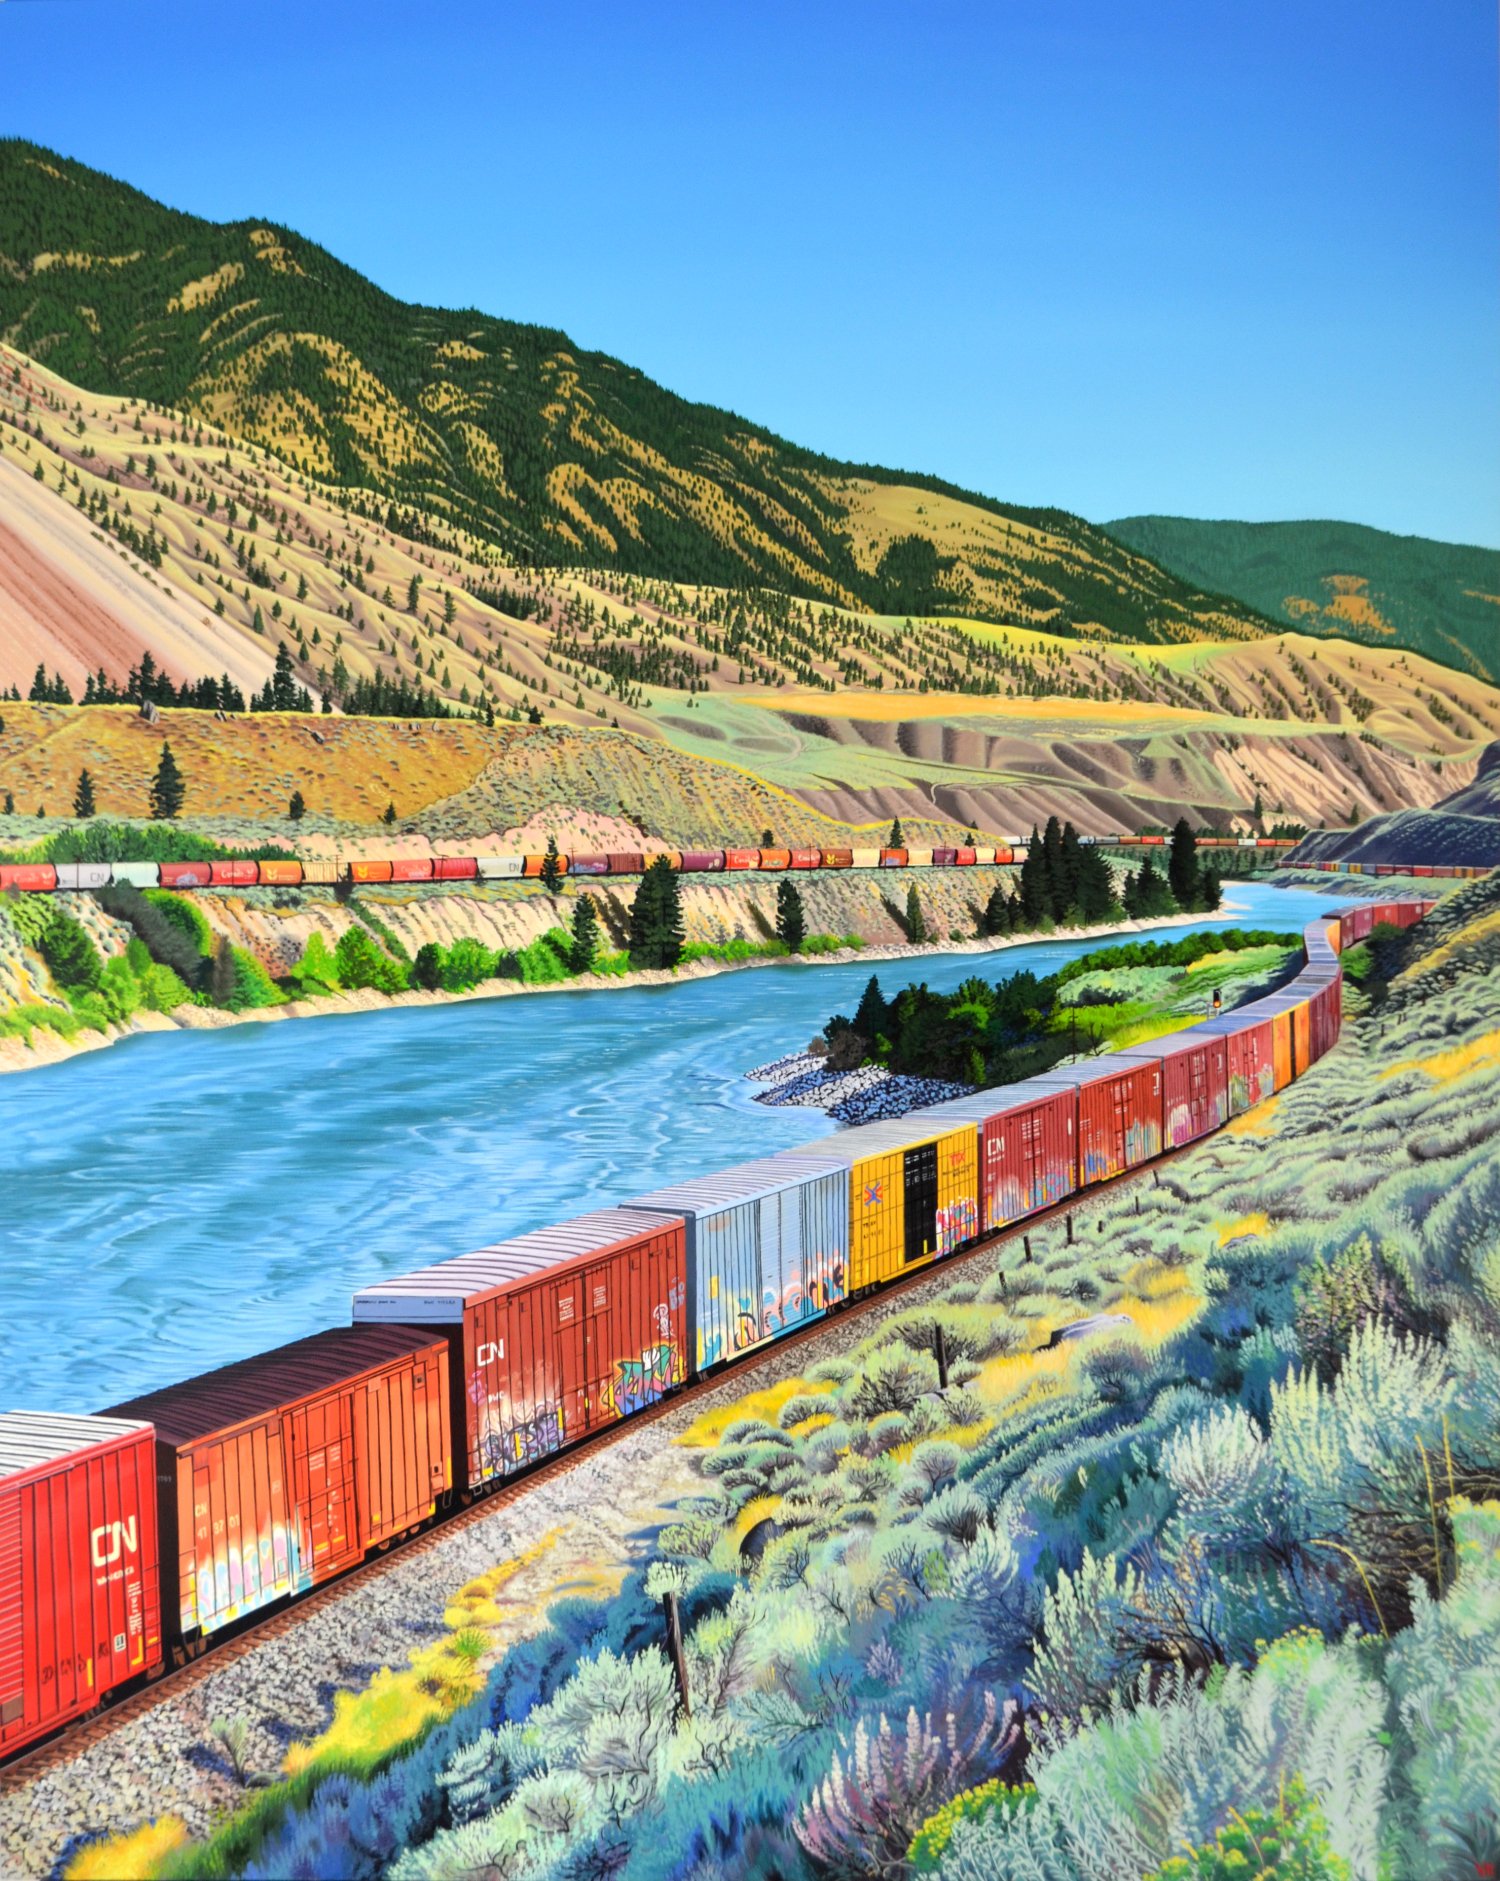   Thompson River Valley    60 x 48    acrylic on canvas  